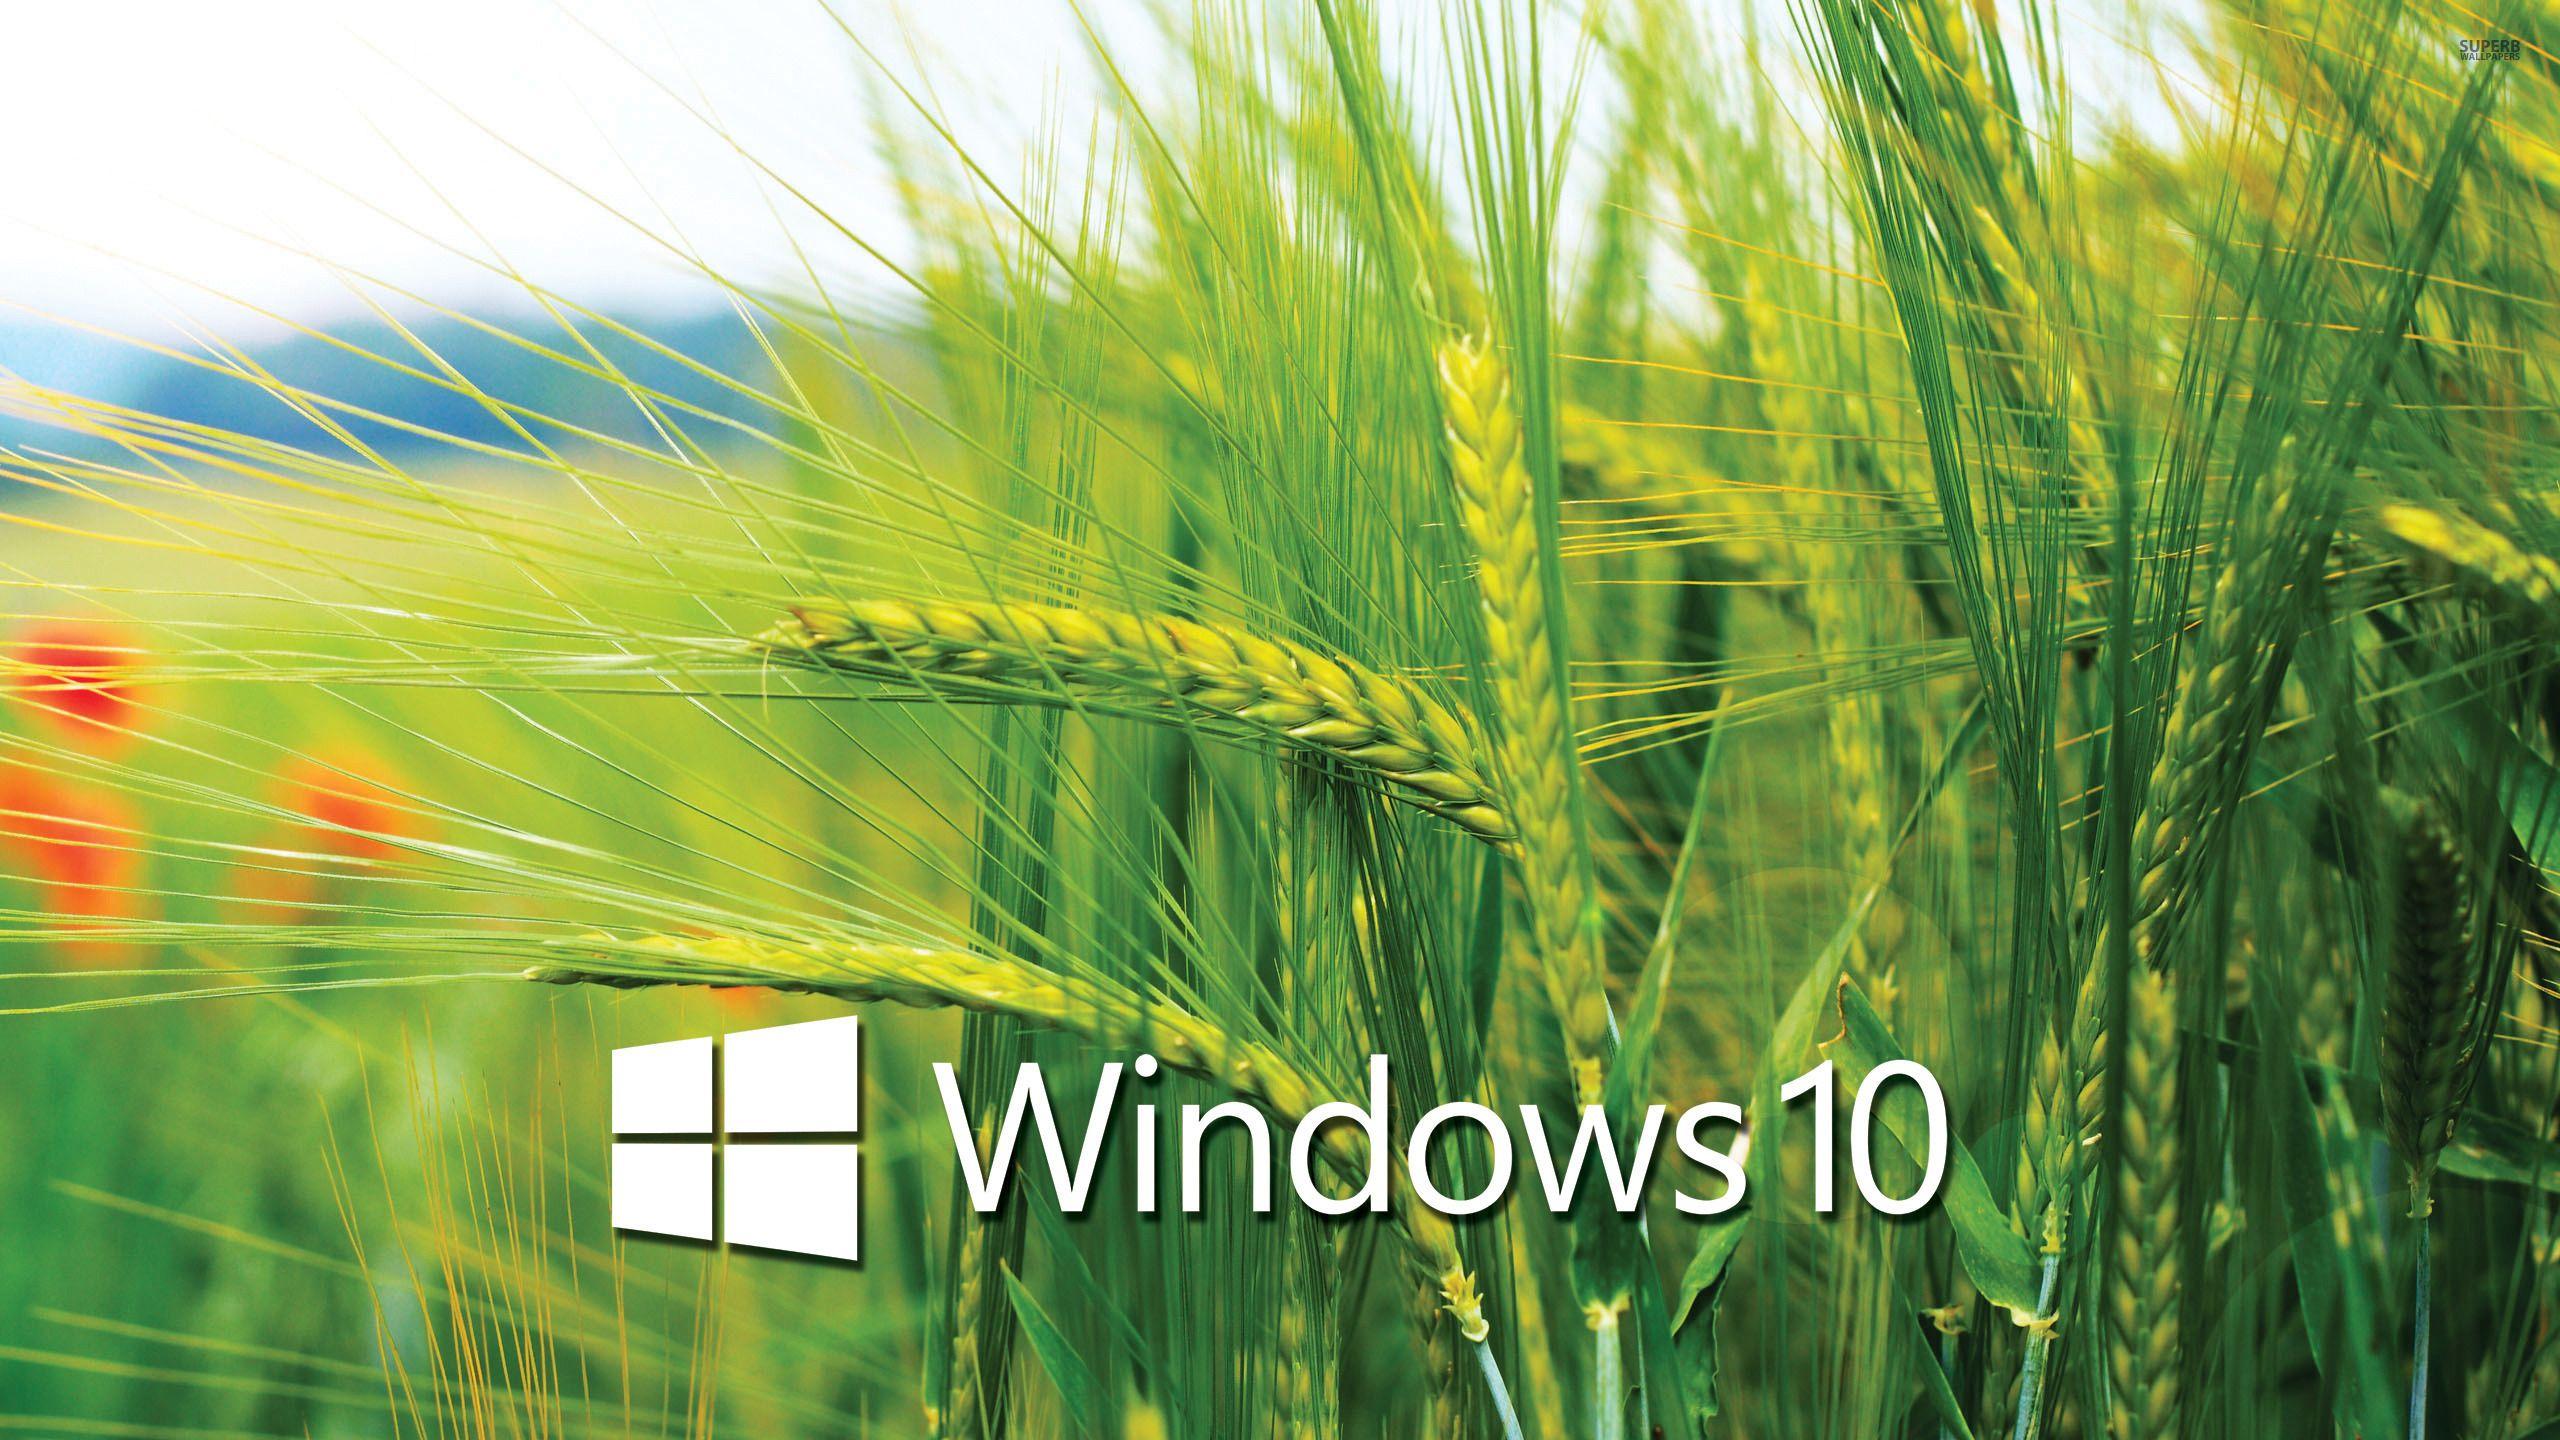 Windows 10 Wallpaper 29 - [2560 x 1440]